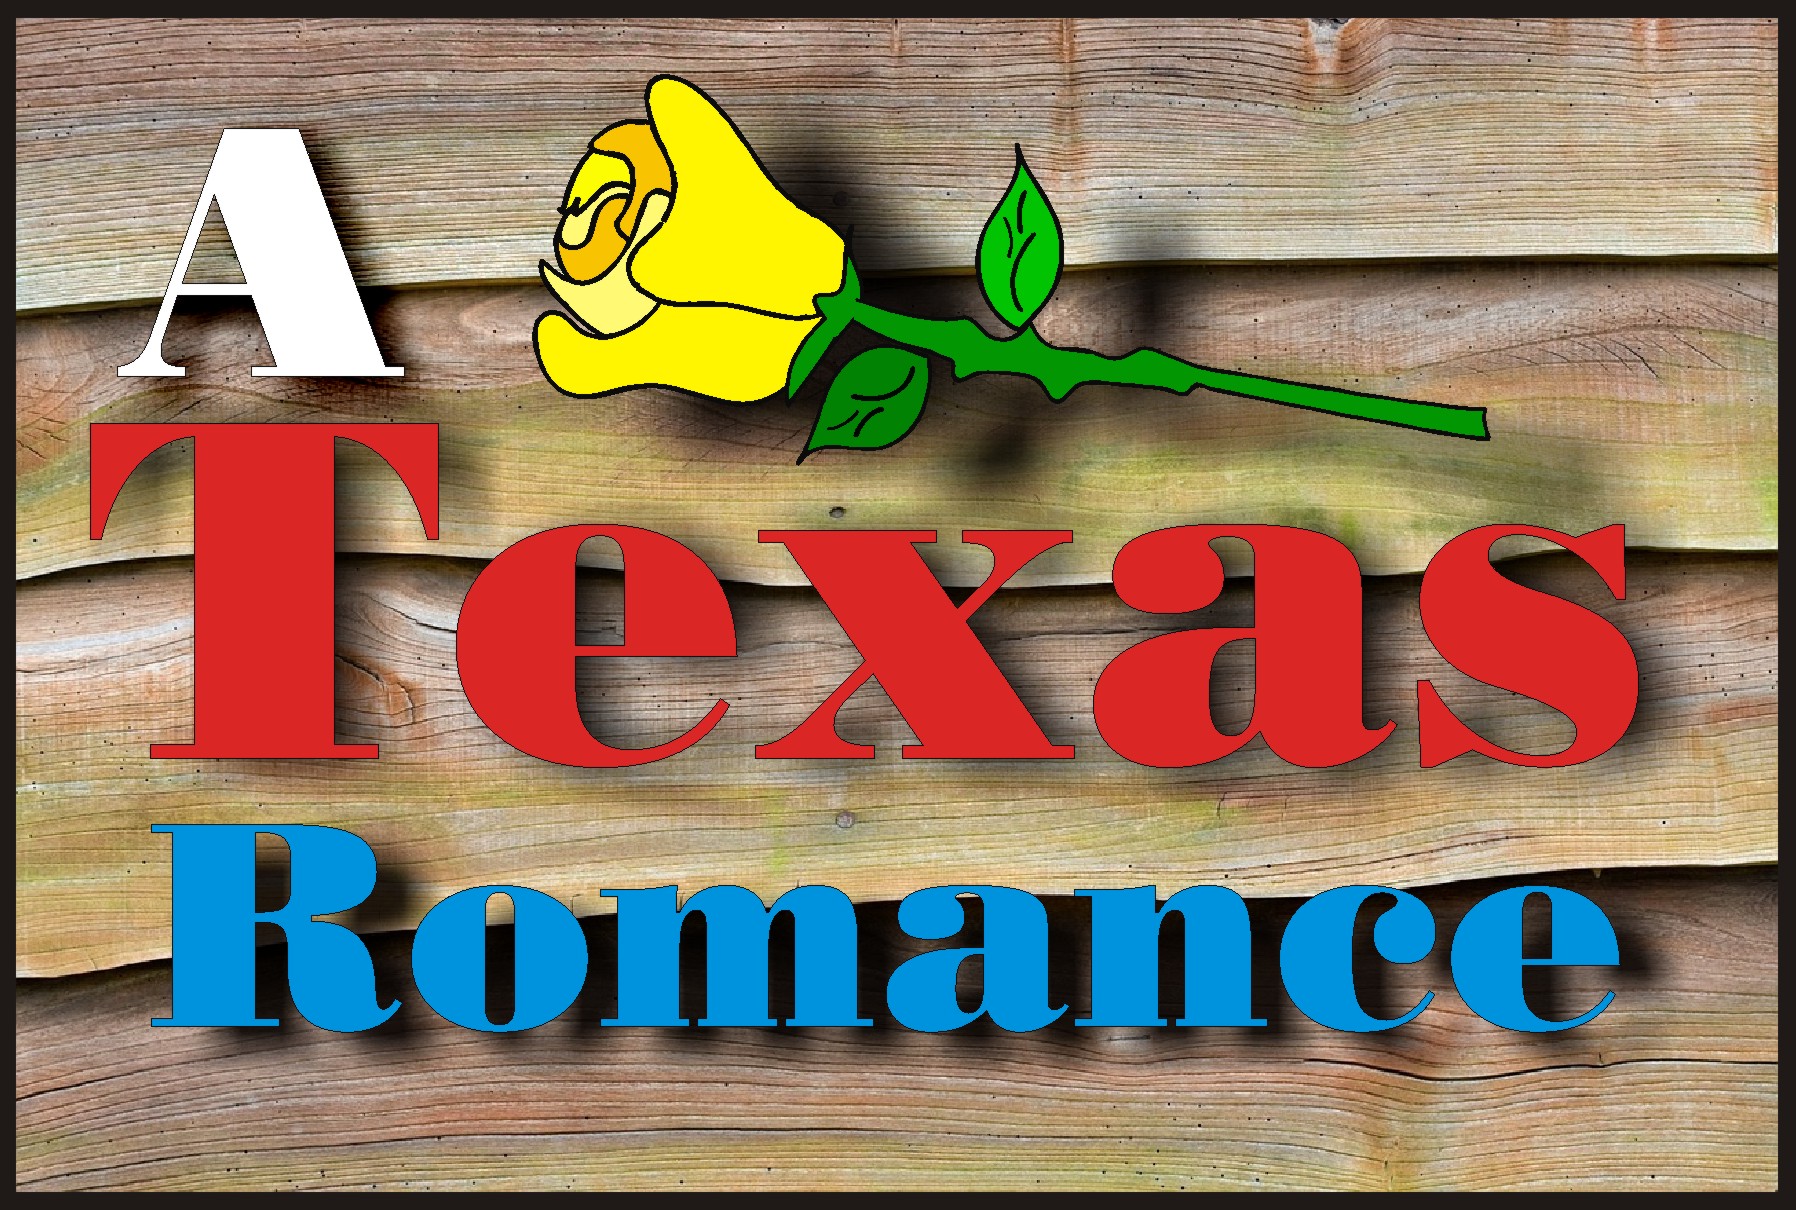 A Texas Romance